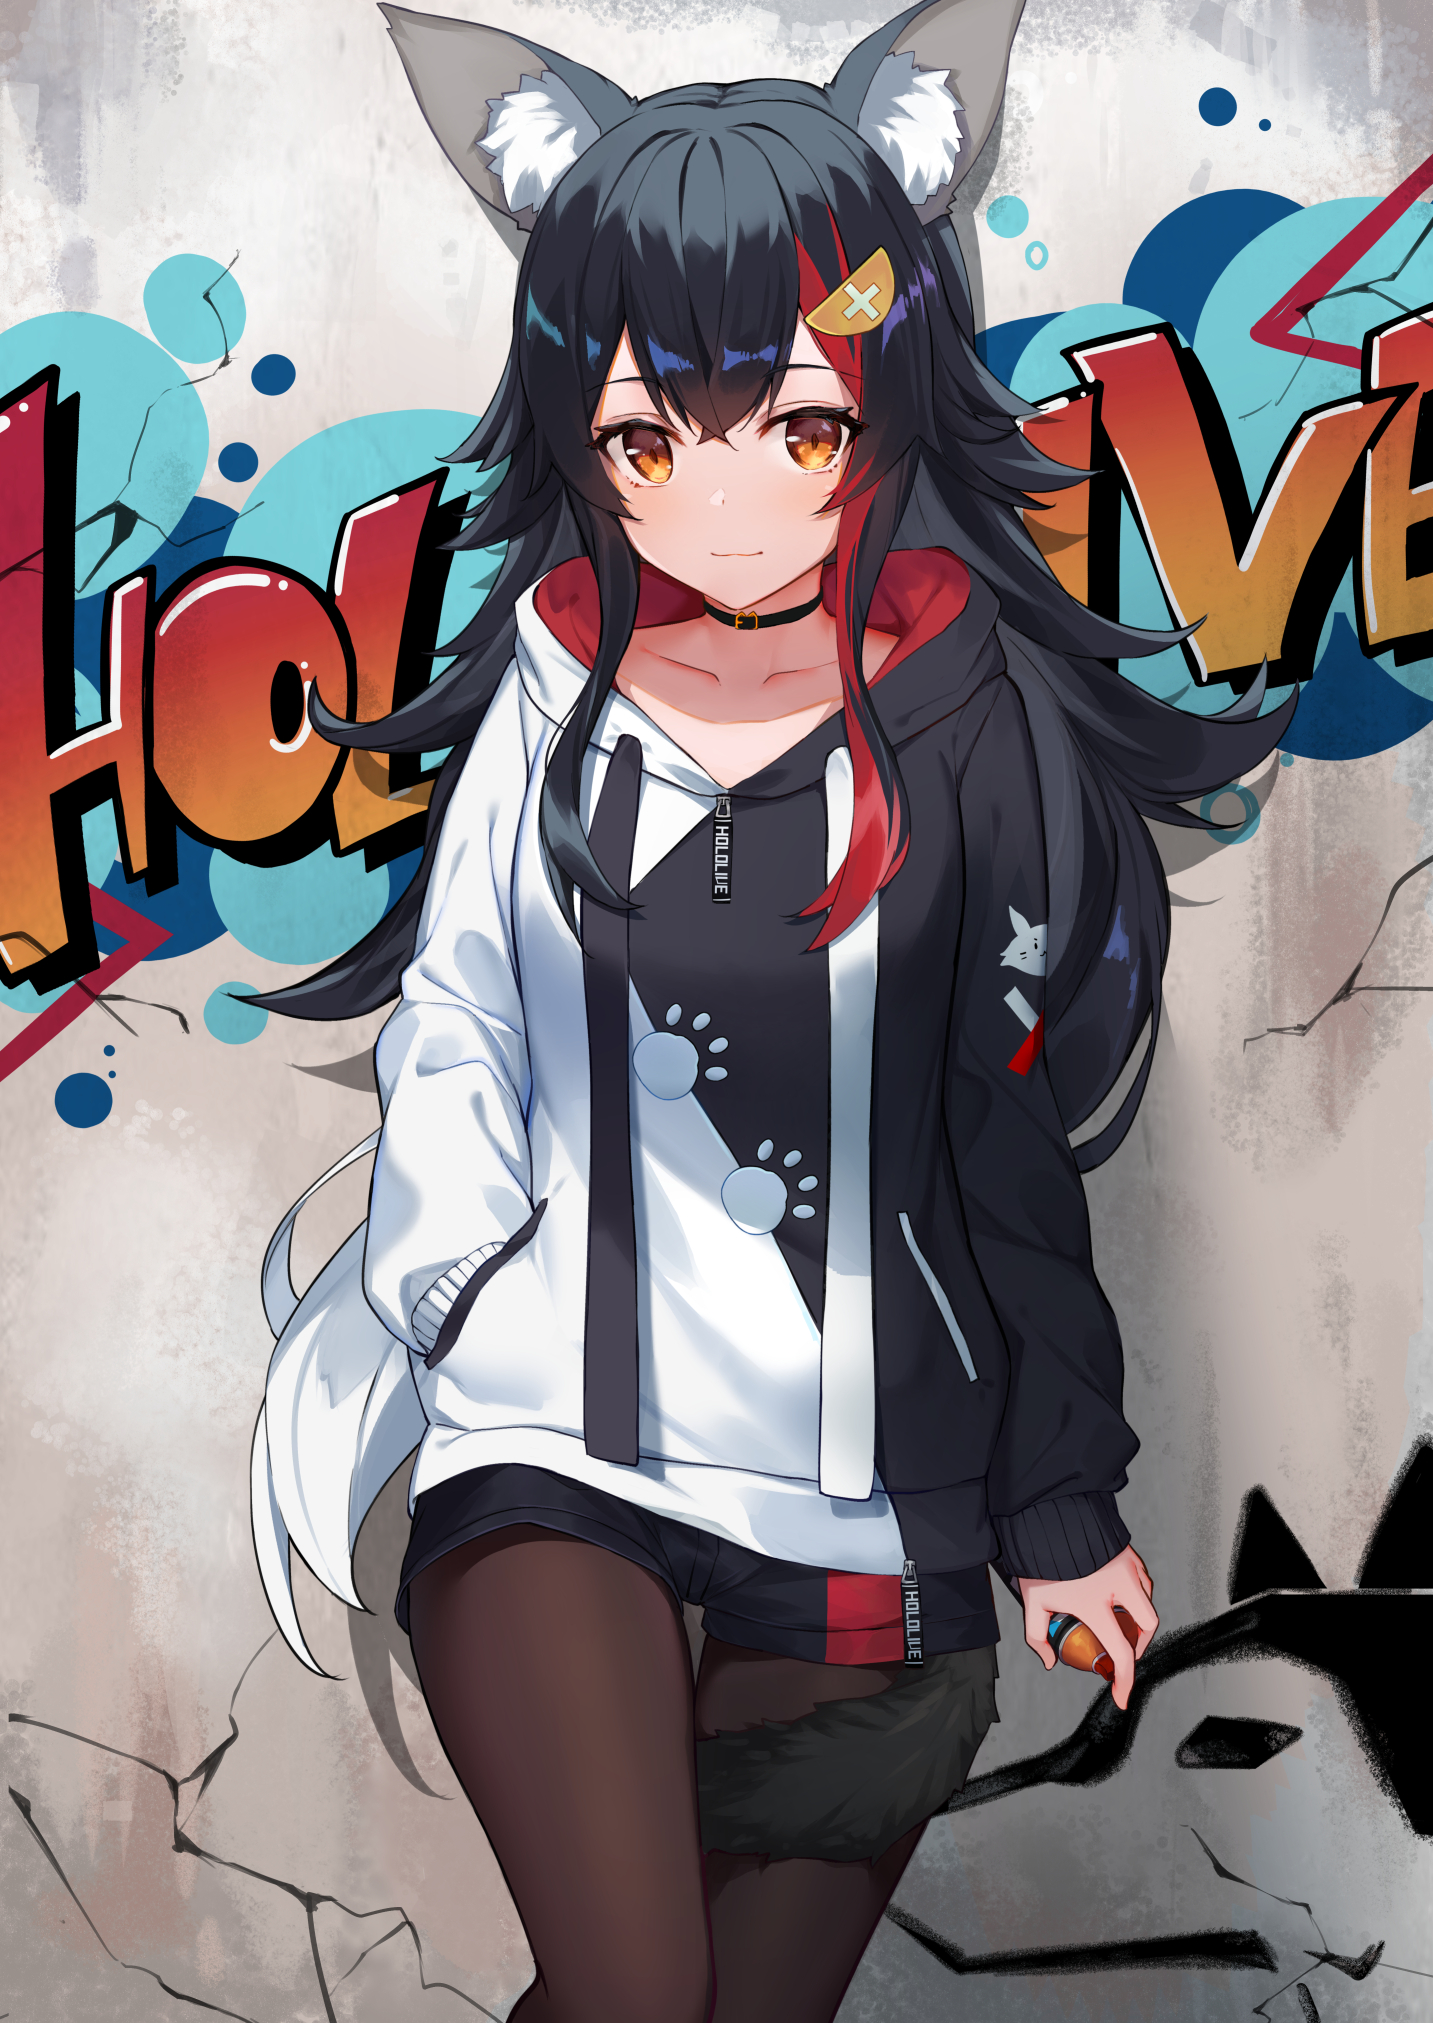 Anime 1433x2023 anime anime girls Virtual Youtuber Hololive Ookami Mio portrait display Isaya graffiti tail animal ears hoods